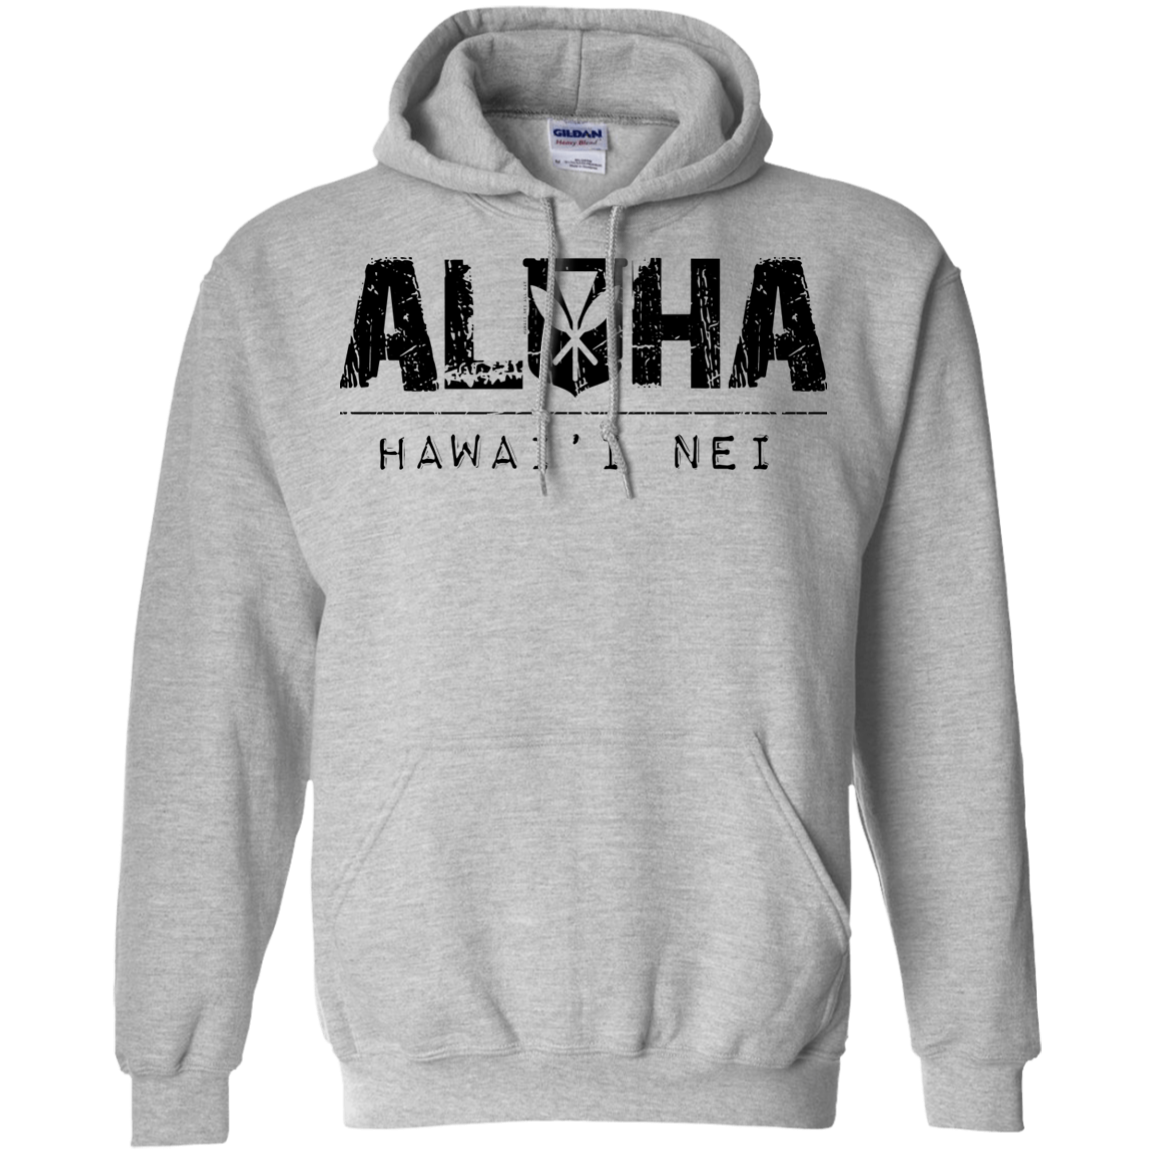 Aloha Hawai'i Nei Pullover Hoodie, Sweatshirts, Hawaii Nei All Day